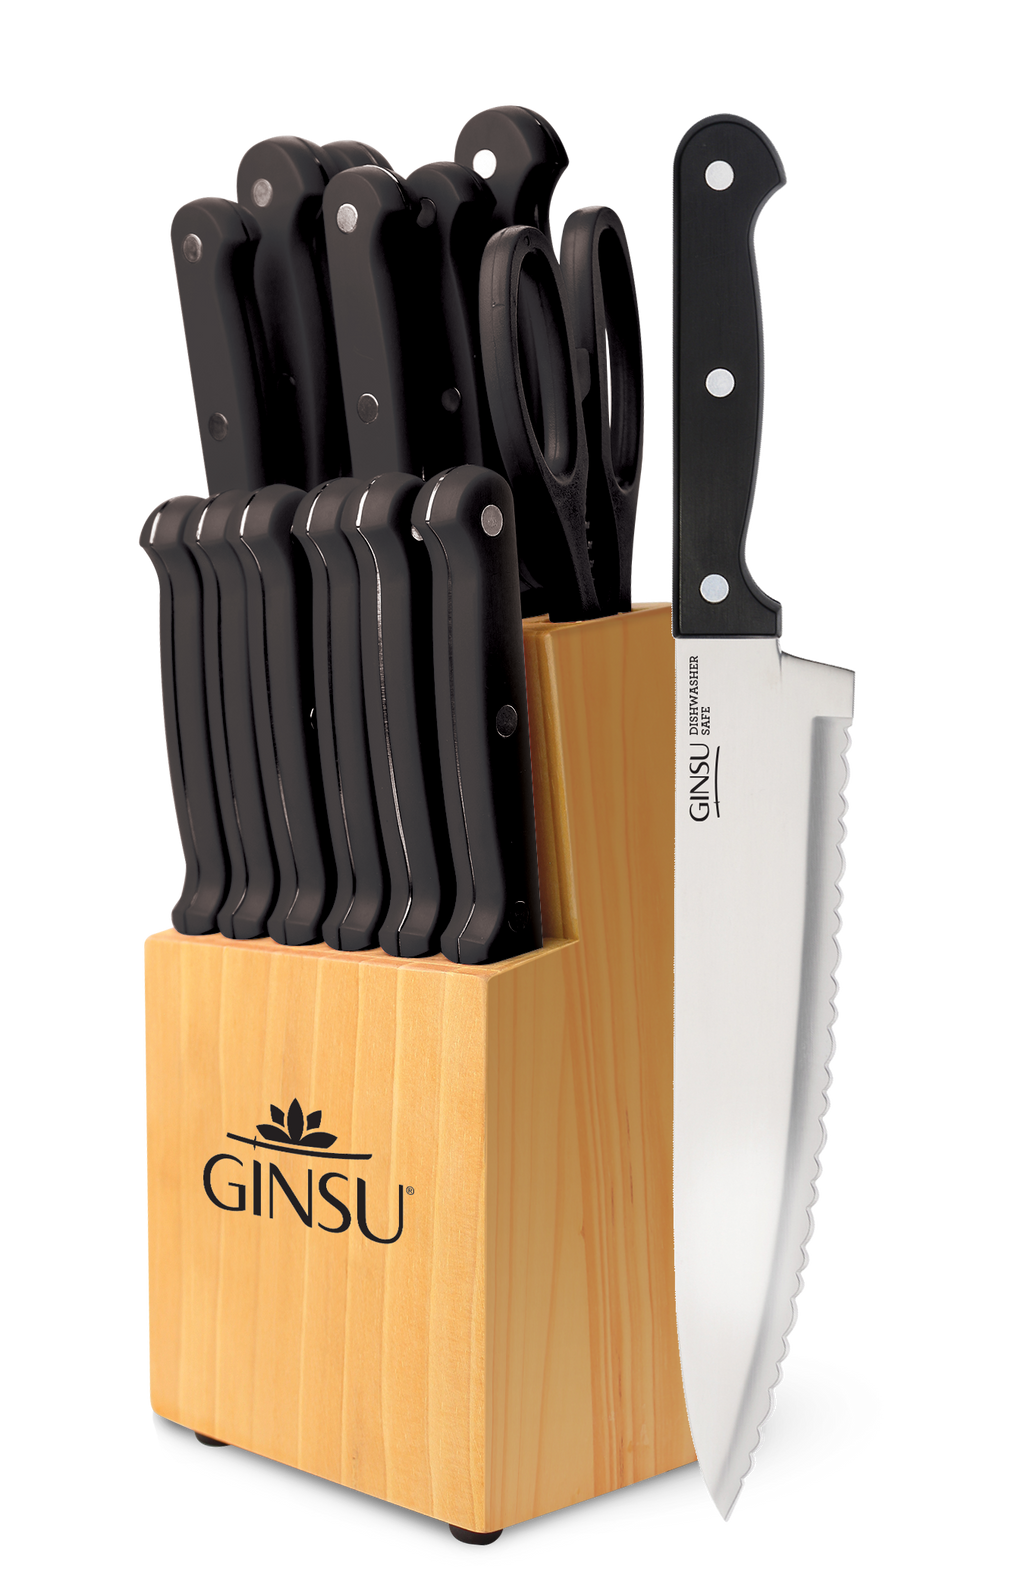 NEW ORIGINAL GINSU All Purpose KNIFE (As Seen On TV) Sharp